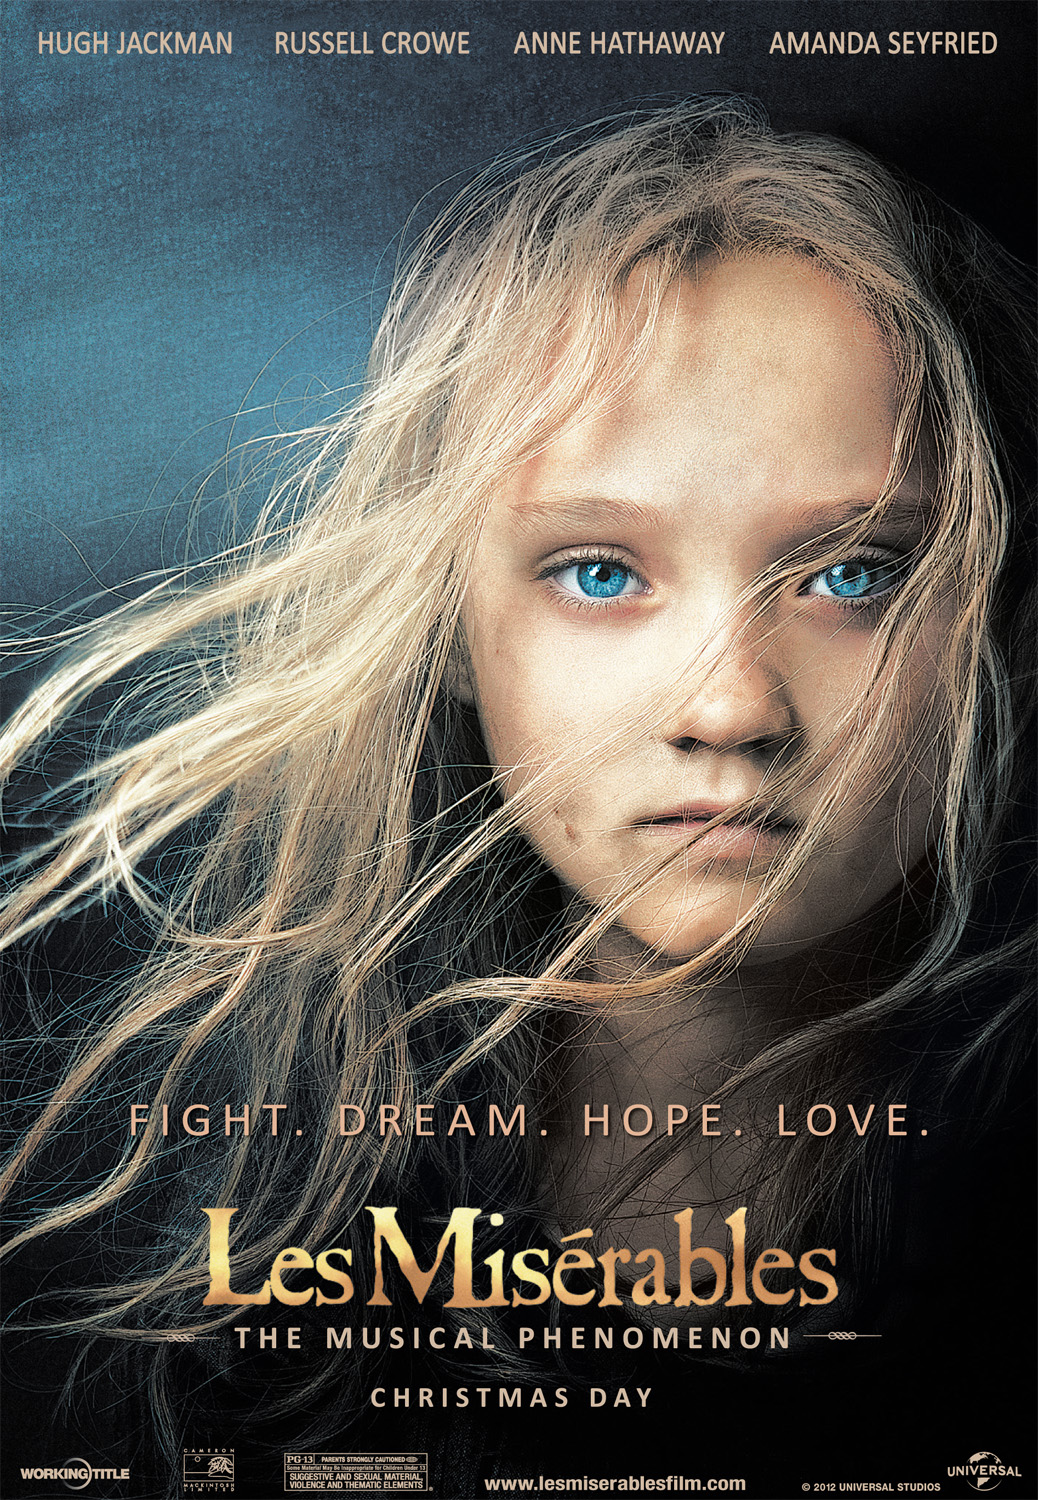 'Les Misérables' Opens December 25! Enter to Win Passes to the St